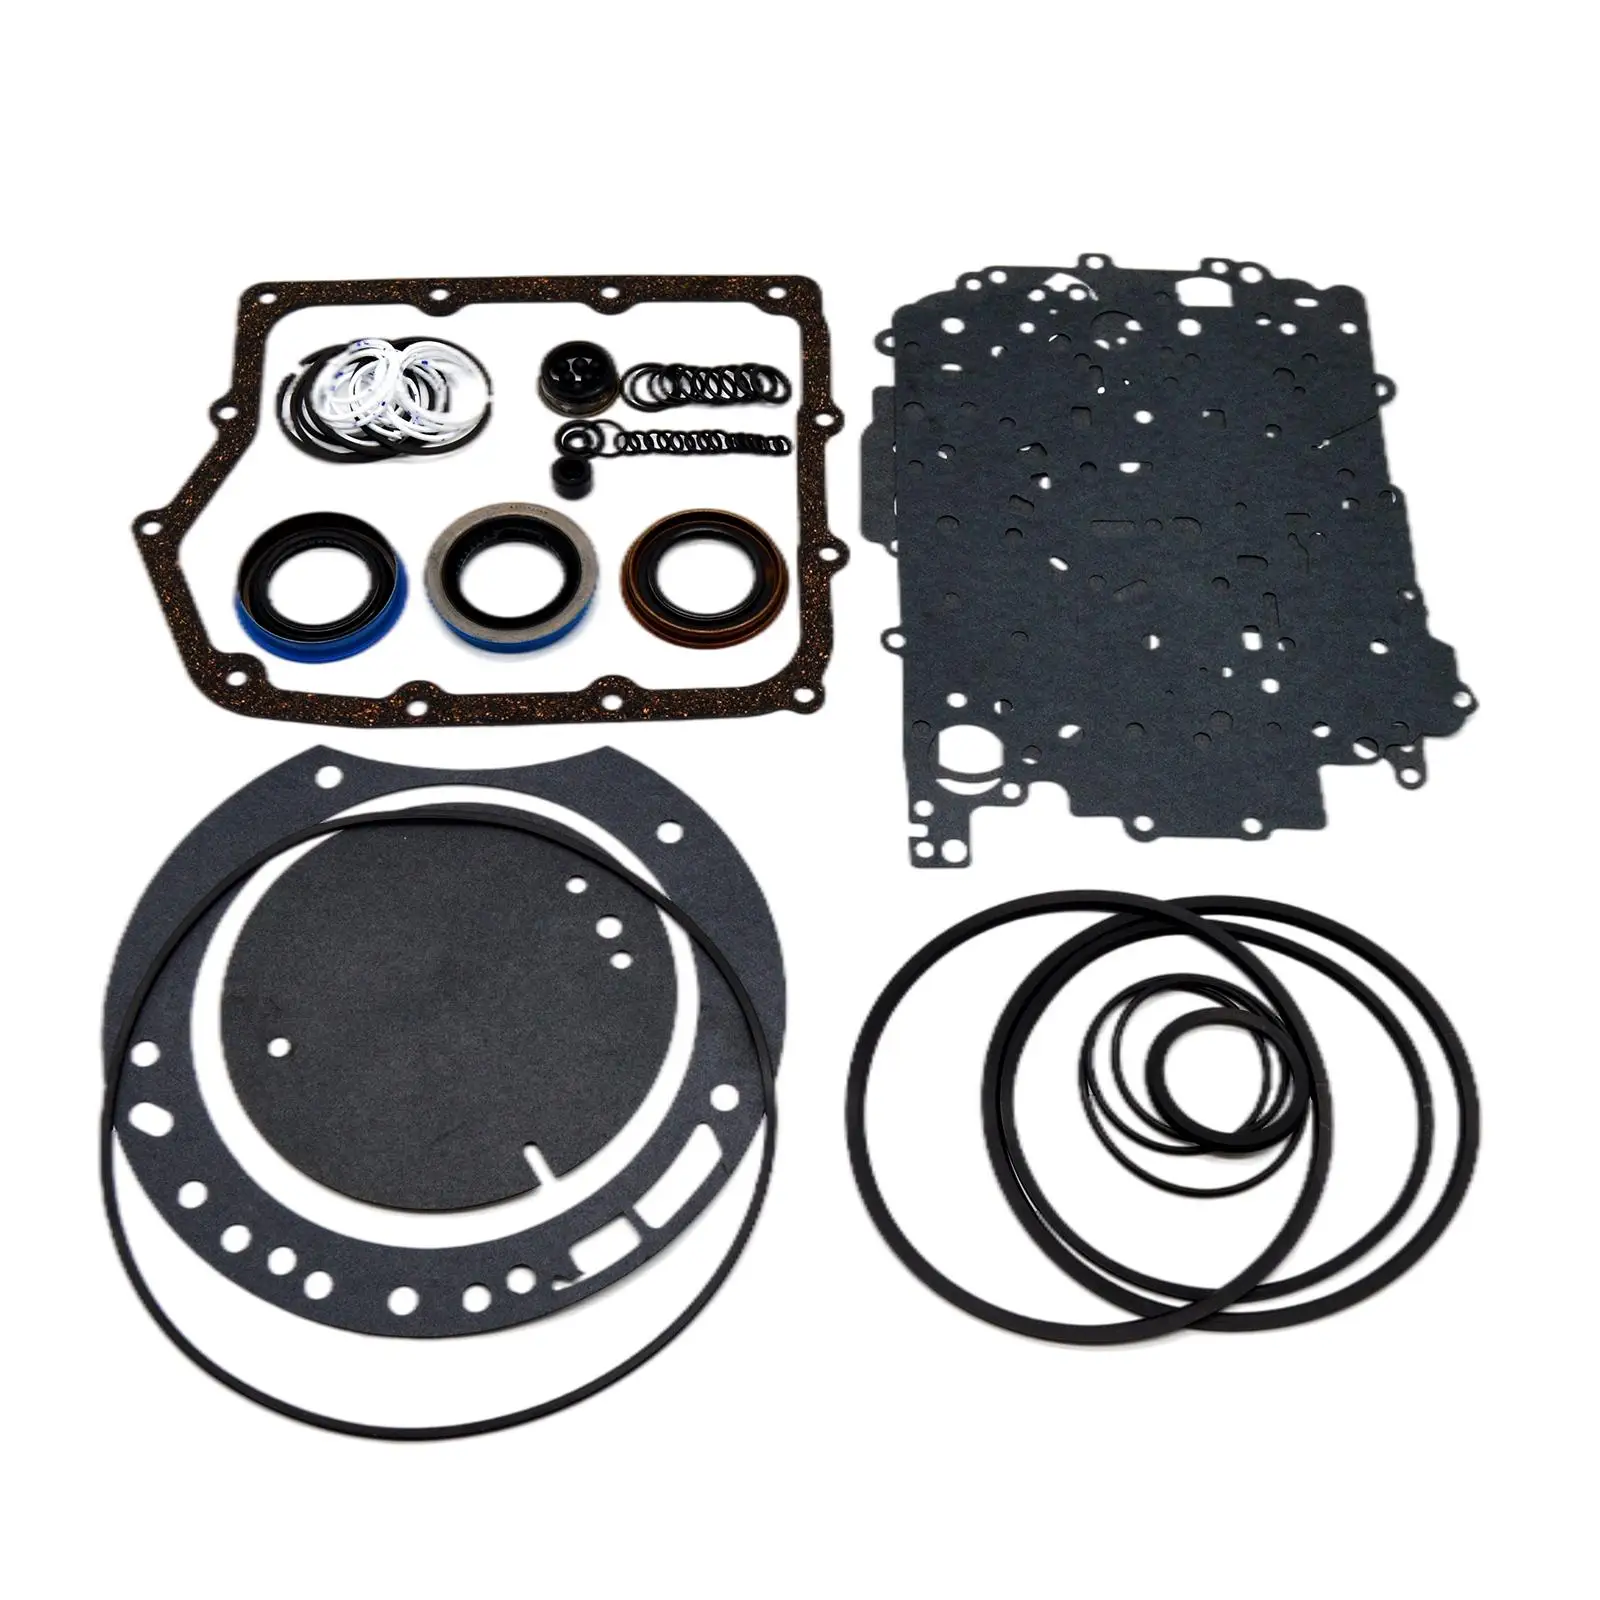 Auto Transmission Master Rebuild Kit Overhaul Seals for Fiat MPV Replace Car Parts Accessories 62TE